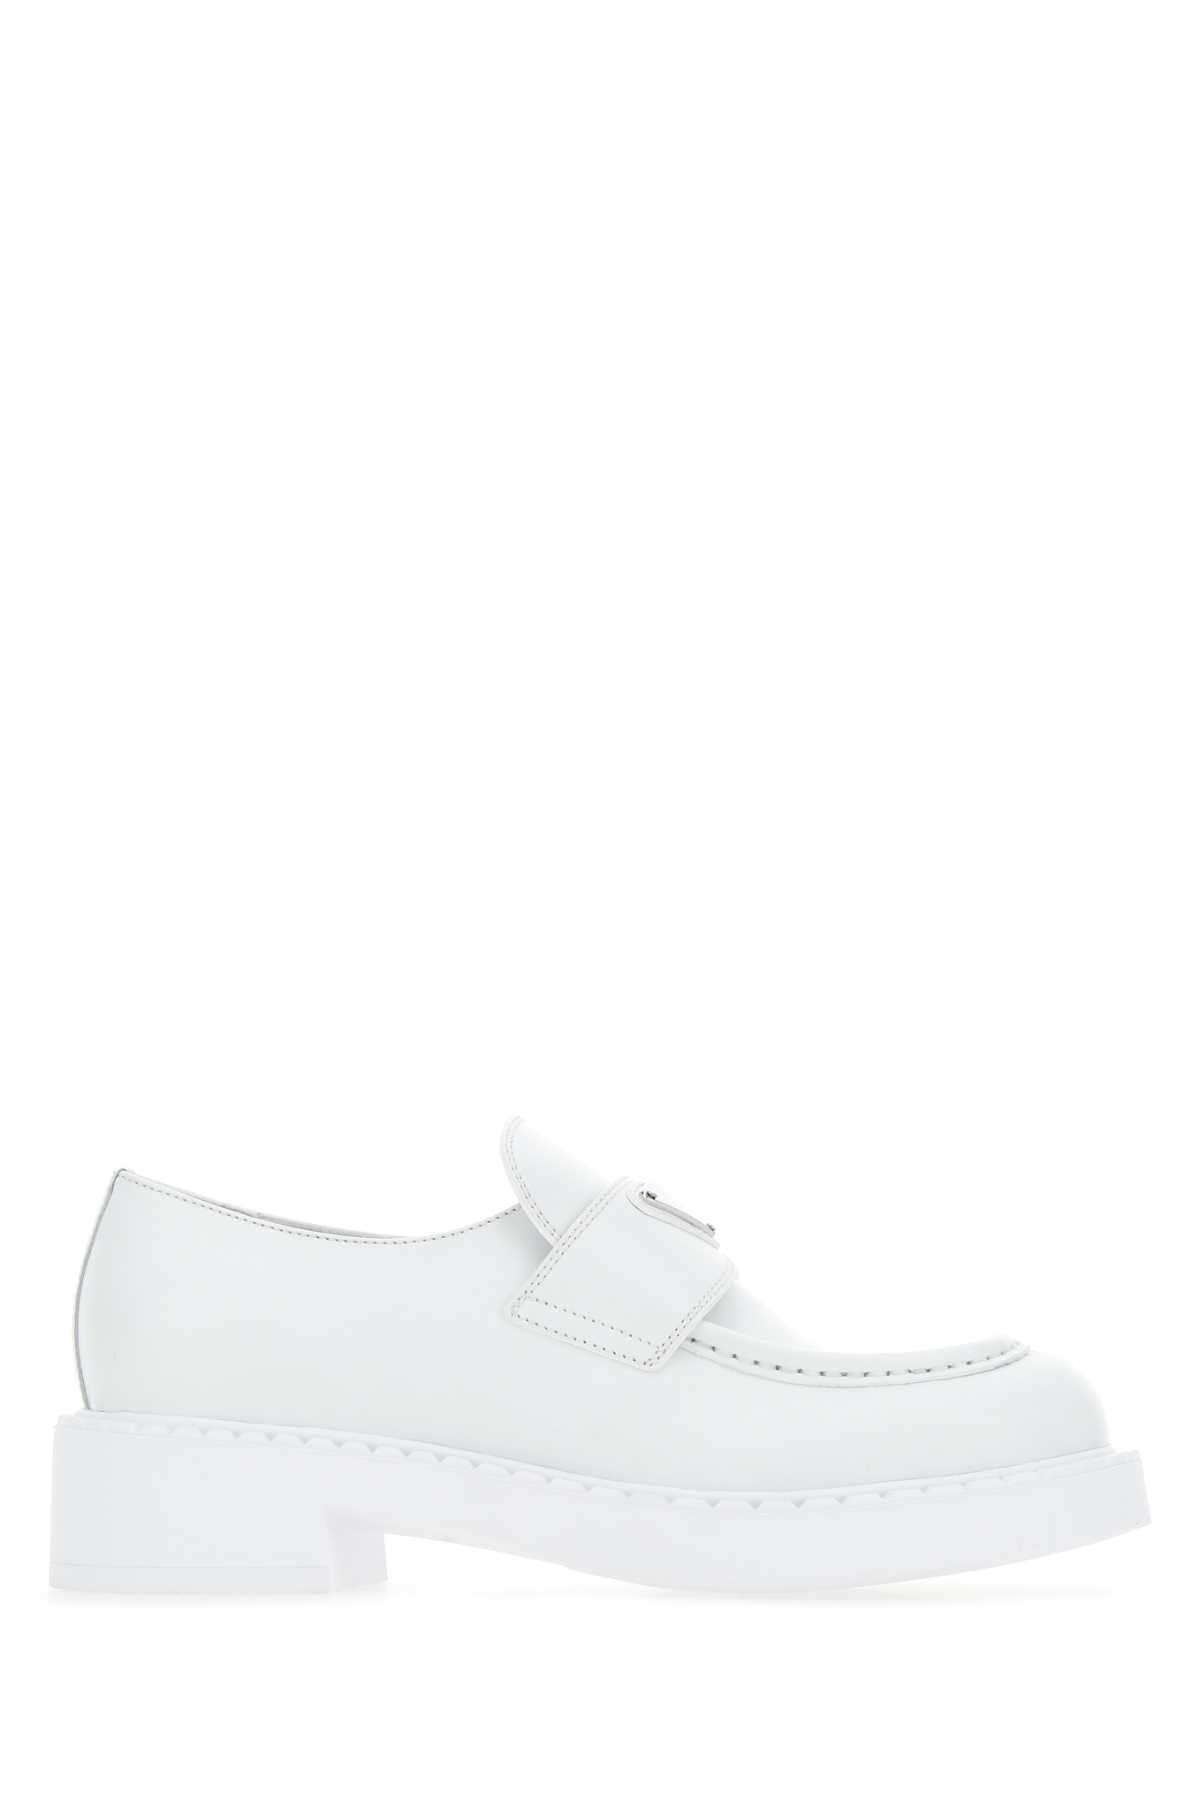 Prada White Leather Loafers